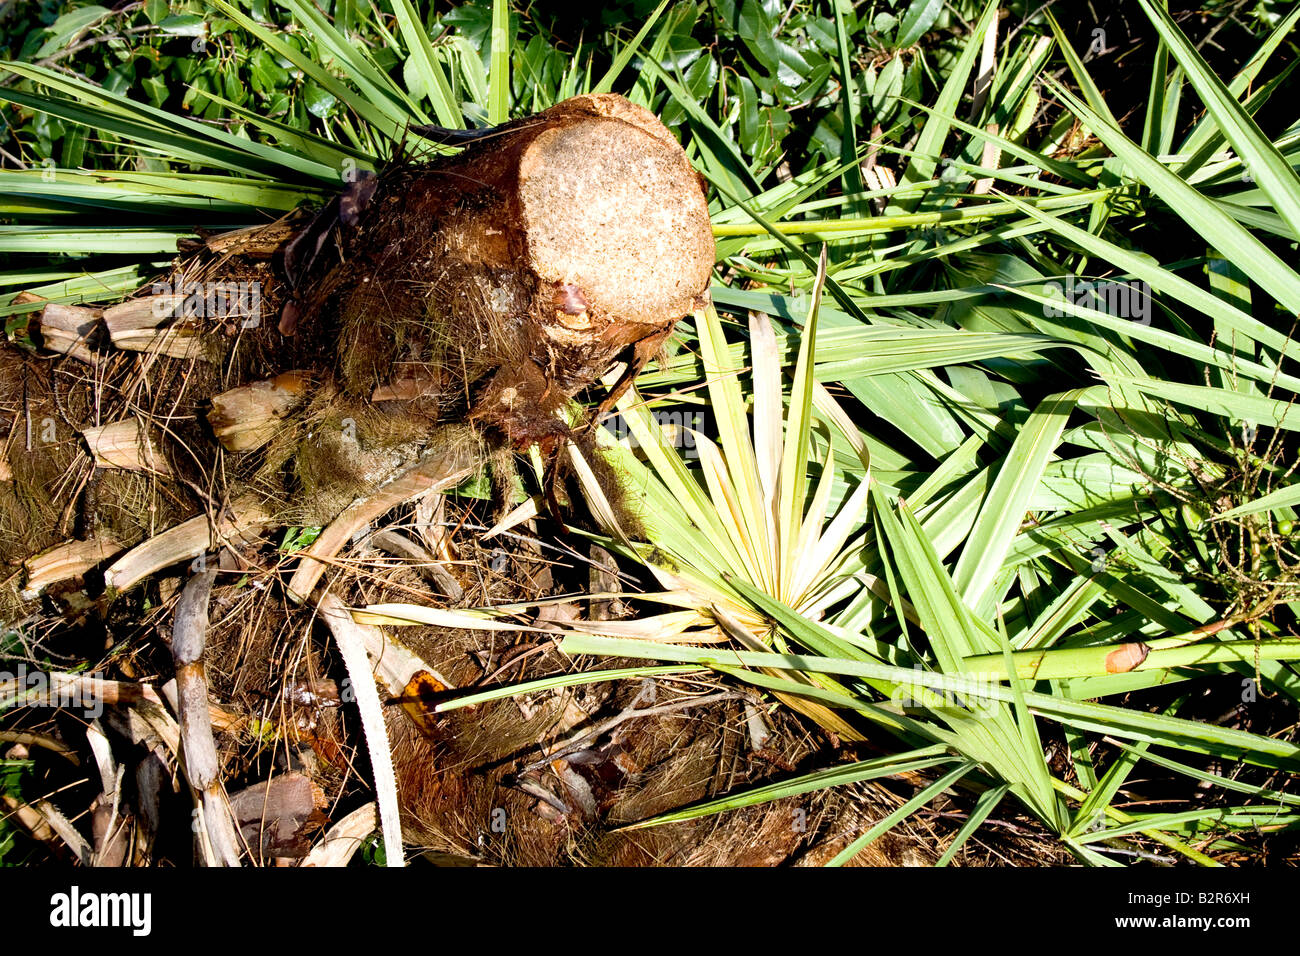 Palm tree stump among multiple palm fronds Stock Photo